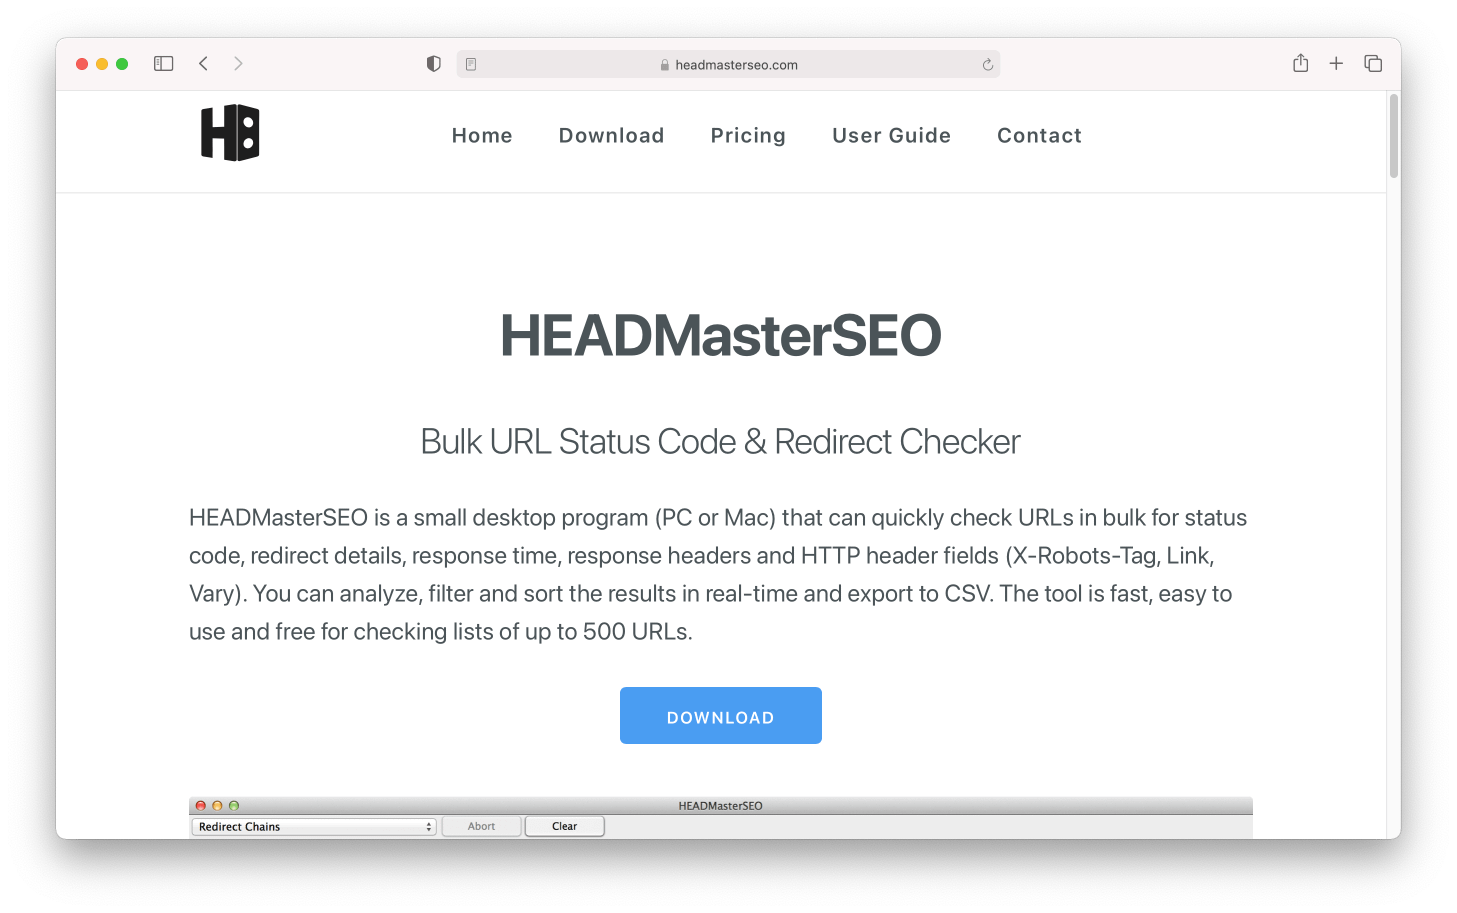 HEADMaster SEO helps check URLs in bulk